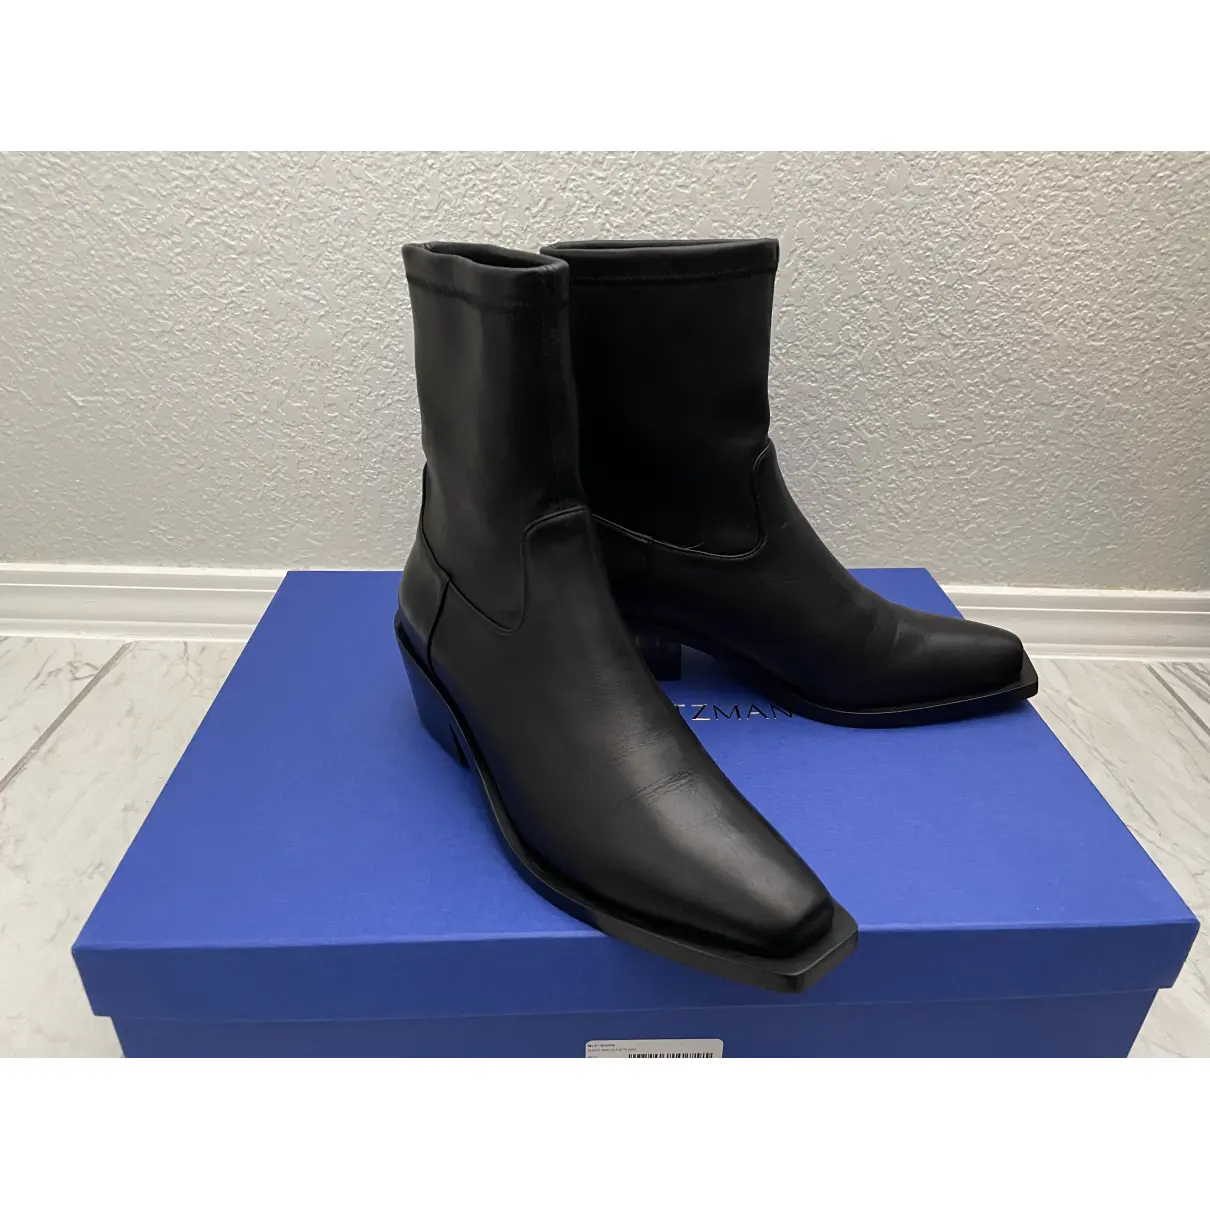 Buy Stuart Weitzman Leather ankle boots online